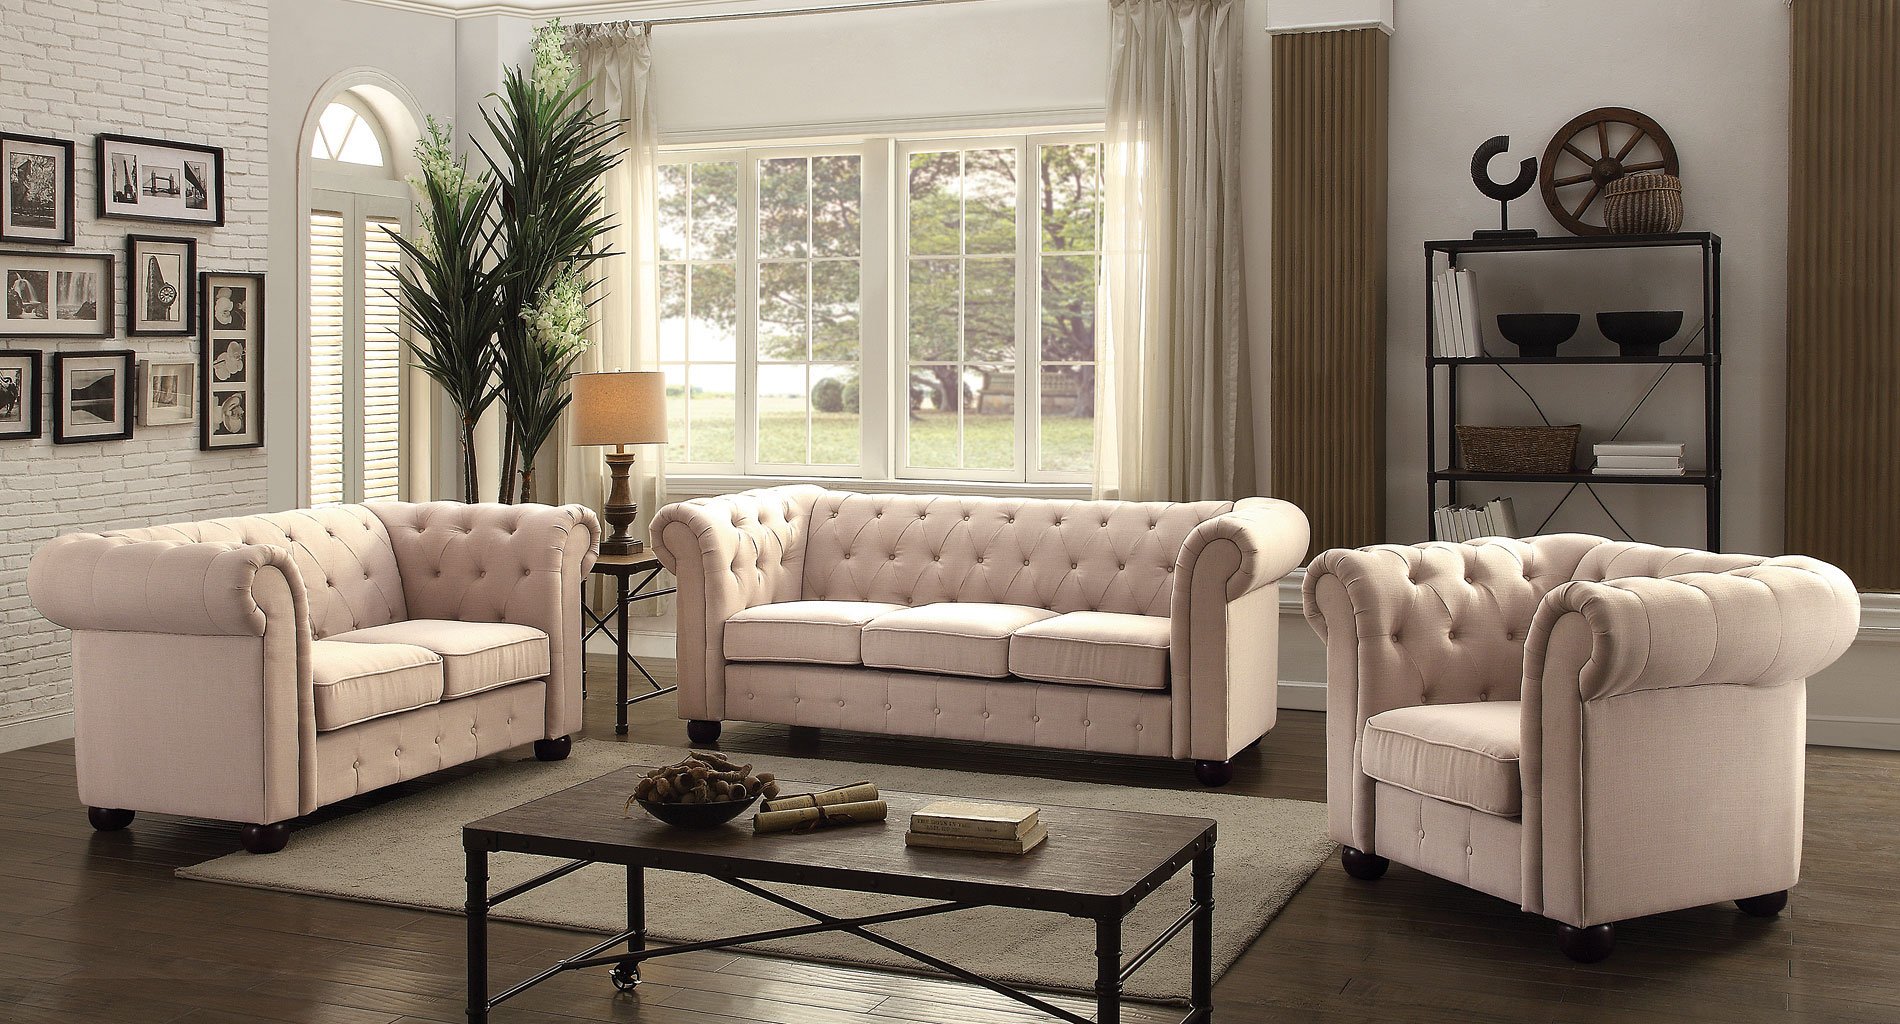 tufted furniture ivory living room